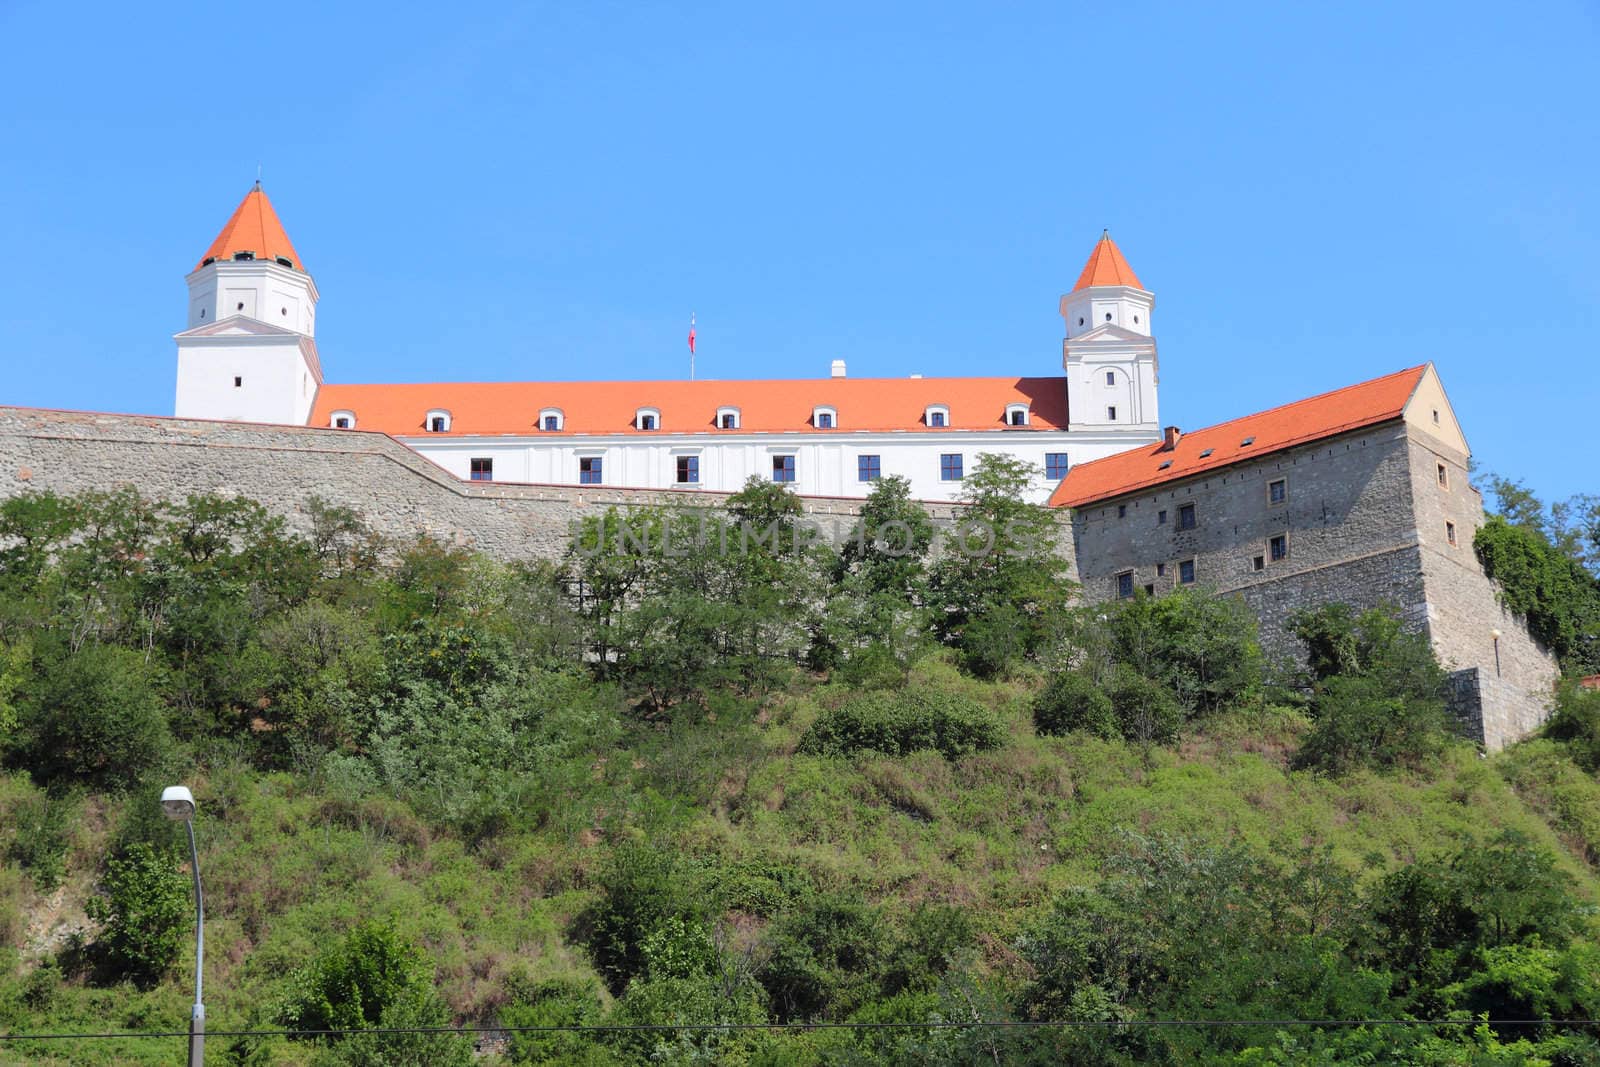 Bratislava, capital city of Slovakia. Famous castle on the hill.